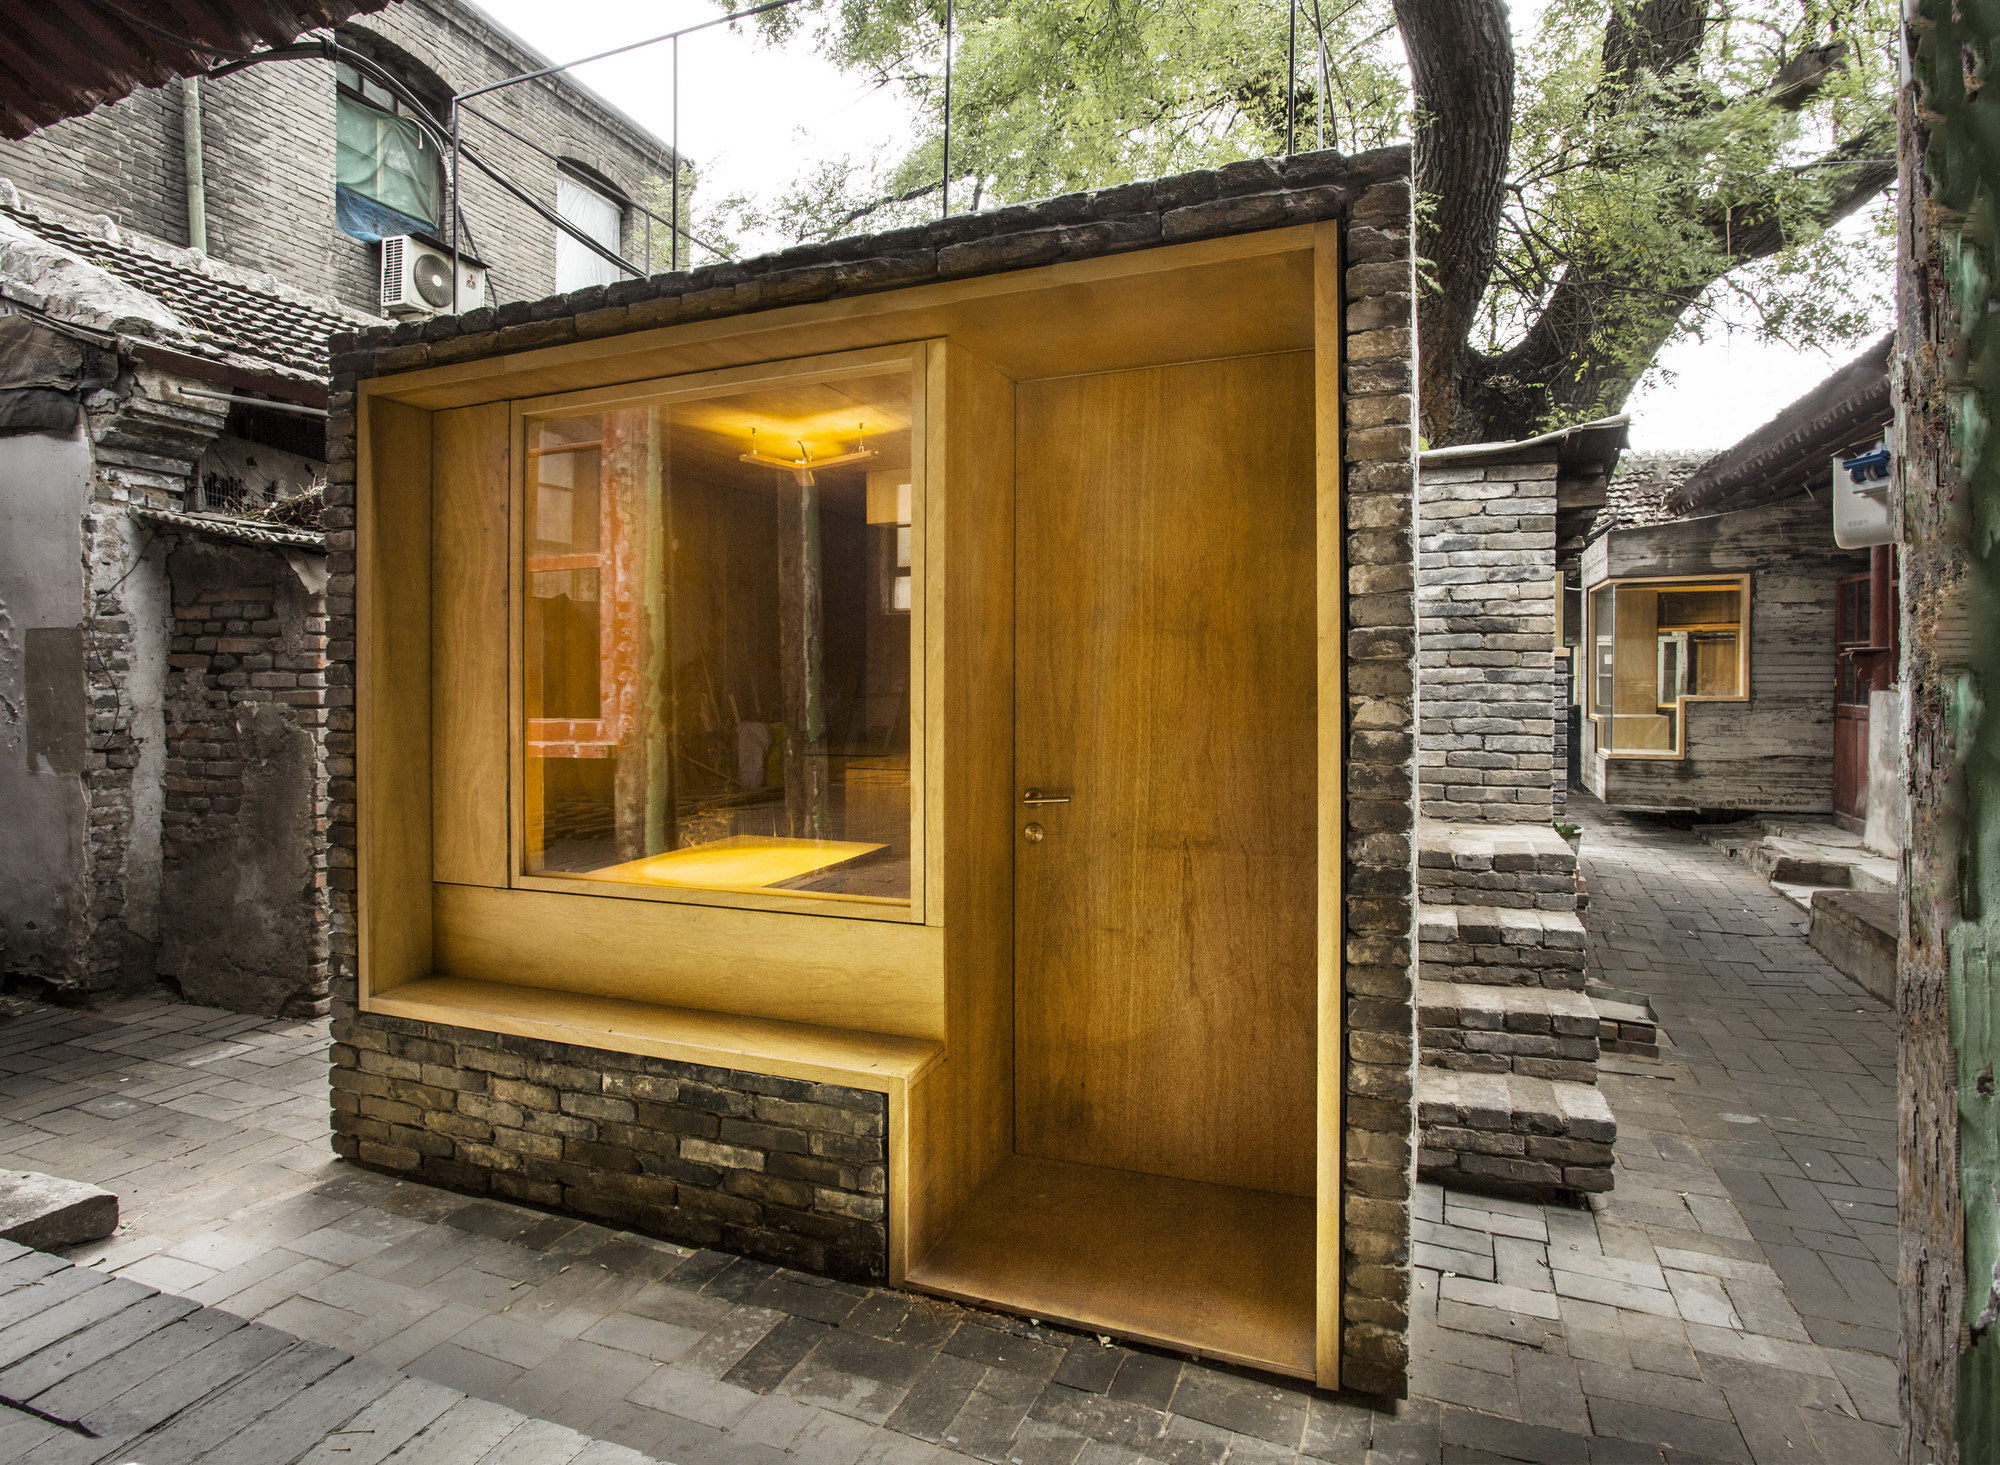 Beijing children’s centre among winners of Aga Khan architecture award for Muslim-friendly design